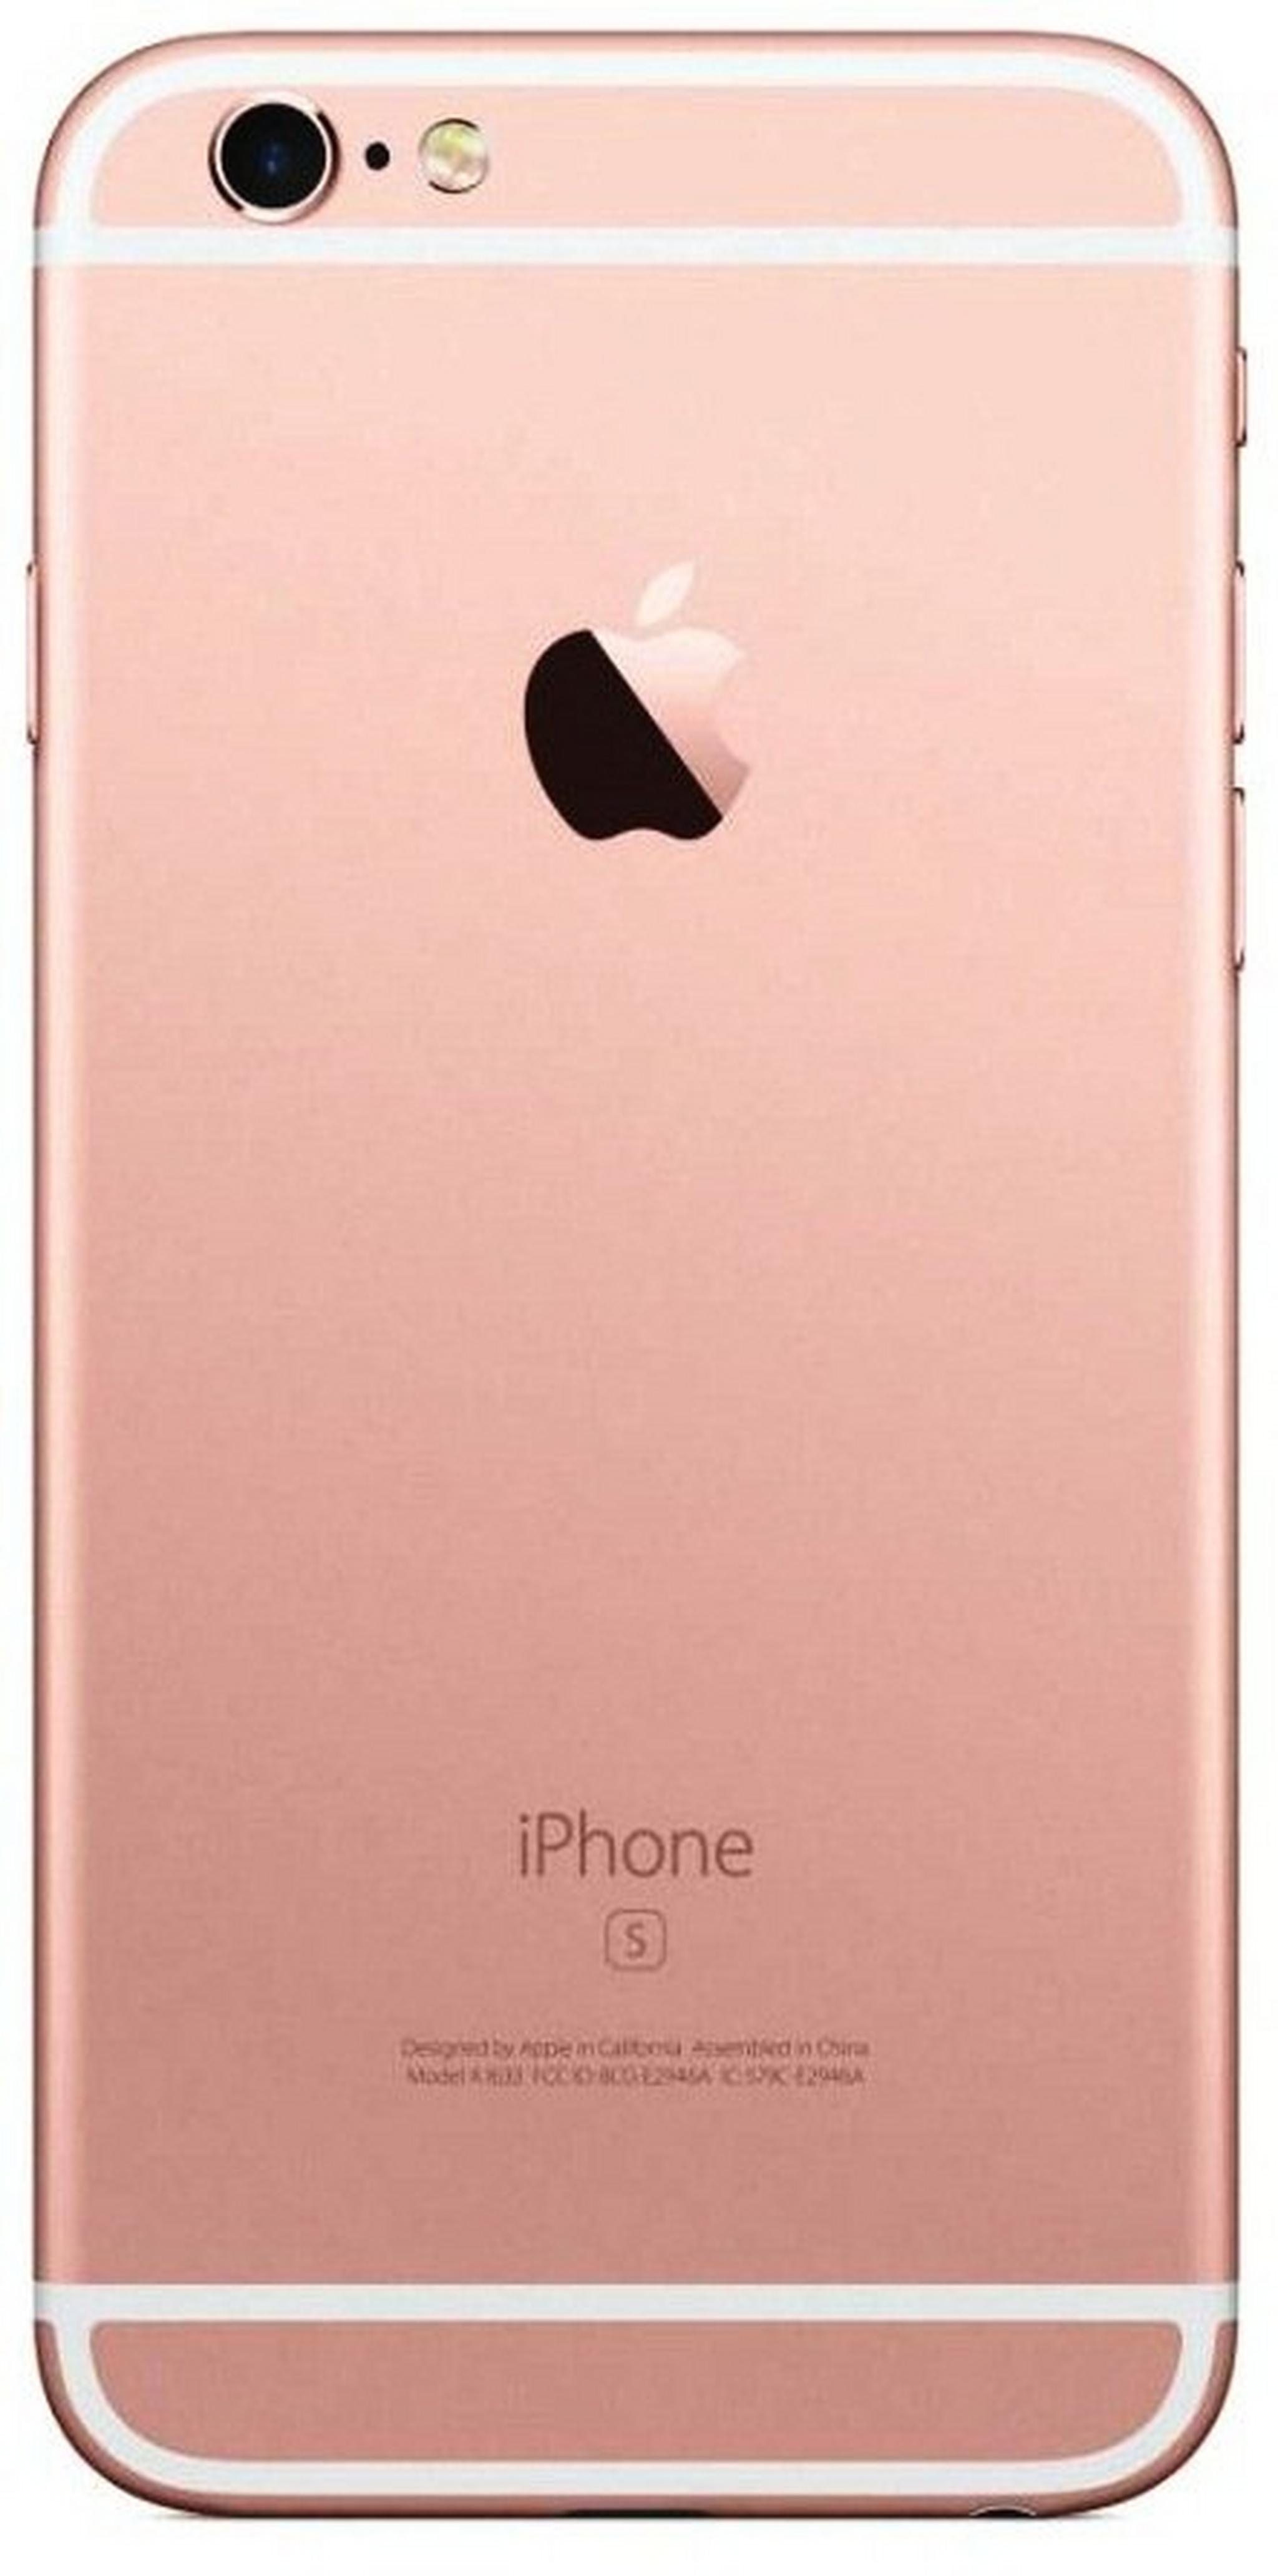 Apple iPhone 6S Plus 128GB 12MP 4G LTE Smartphone - Rose Gold